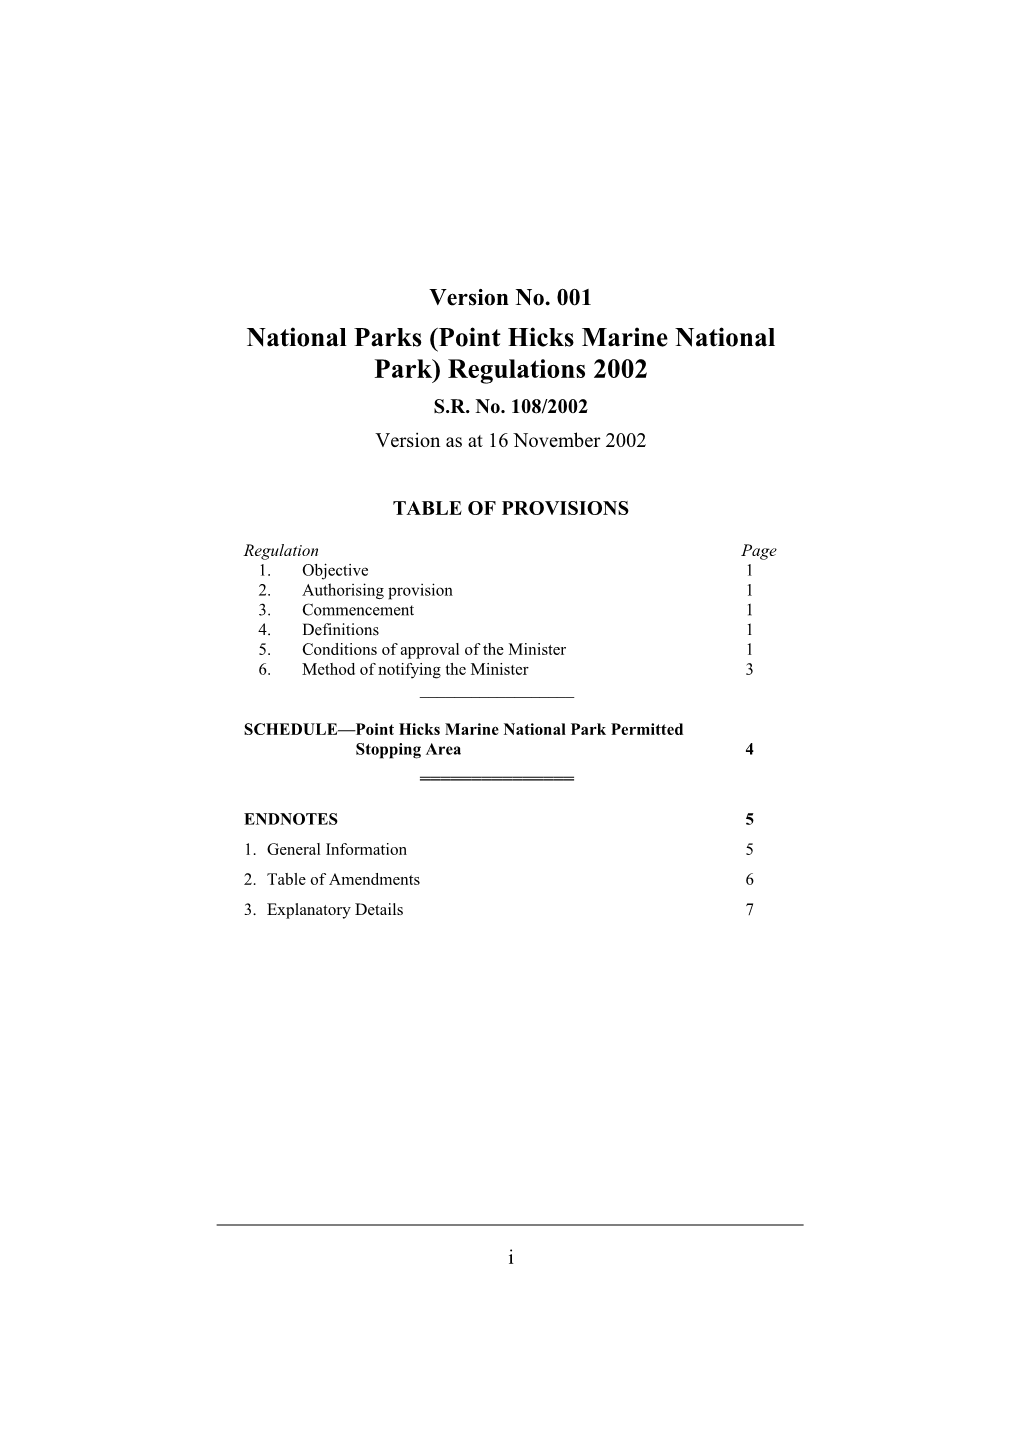 National Parks (Point Hicks Marine National Park) Regulations 2002